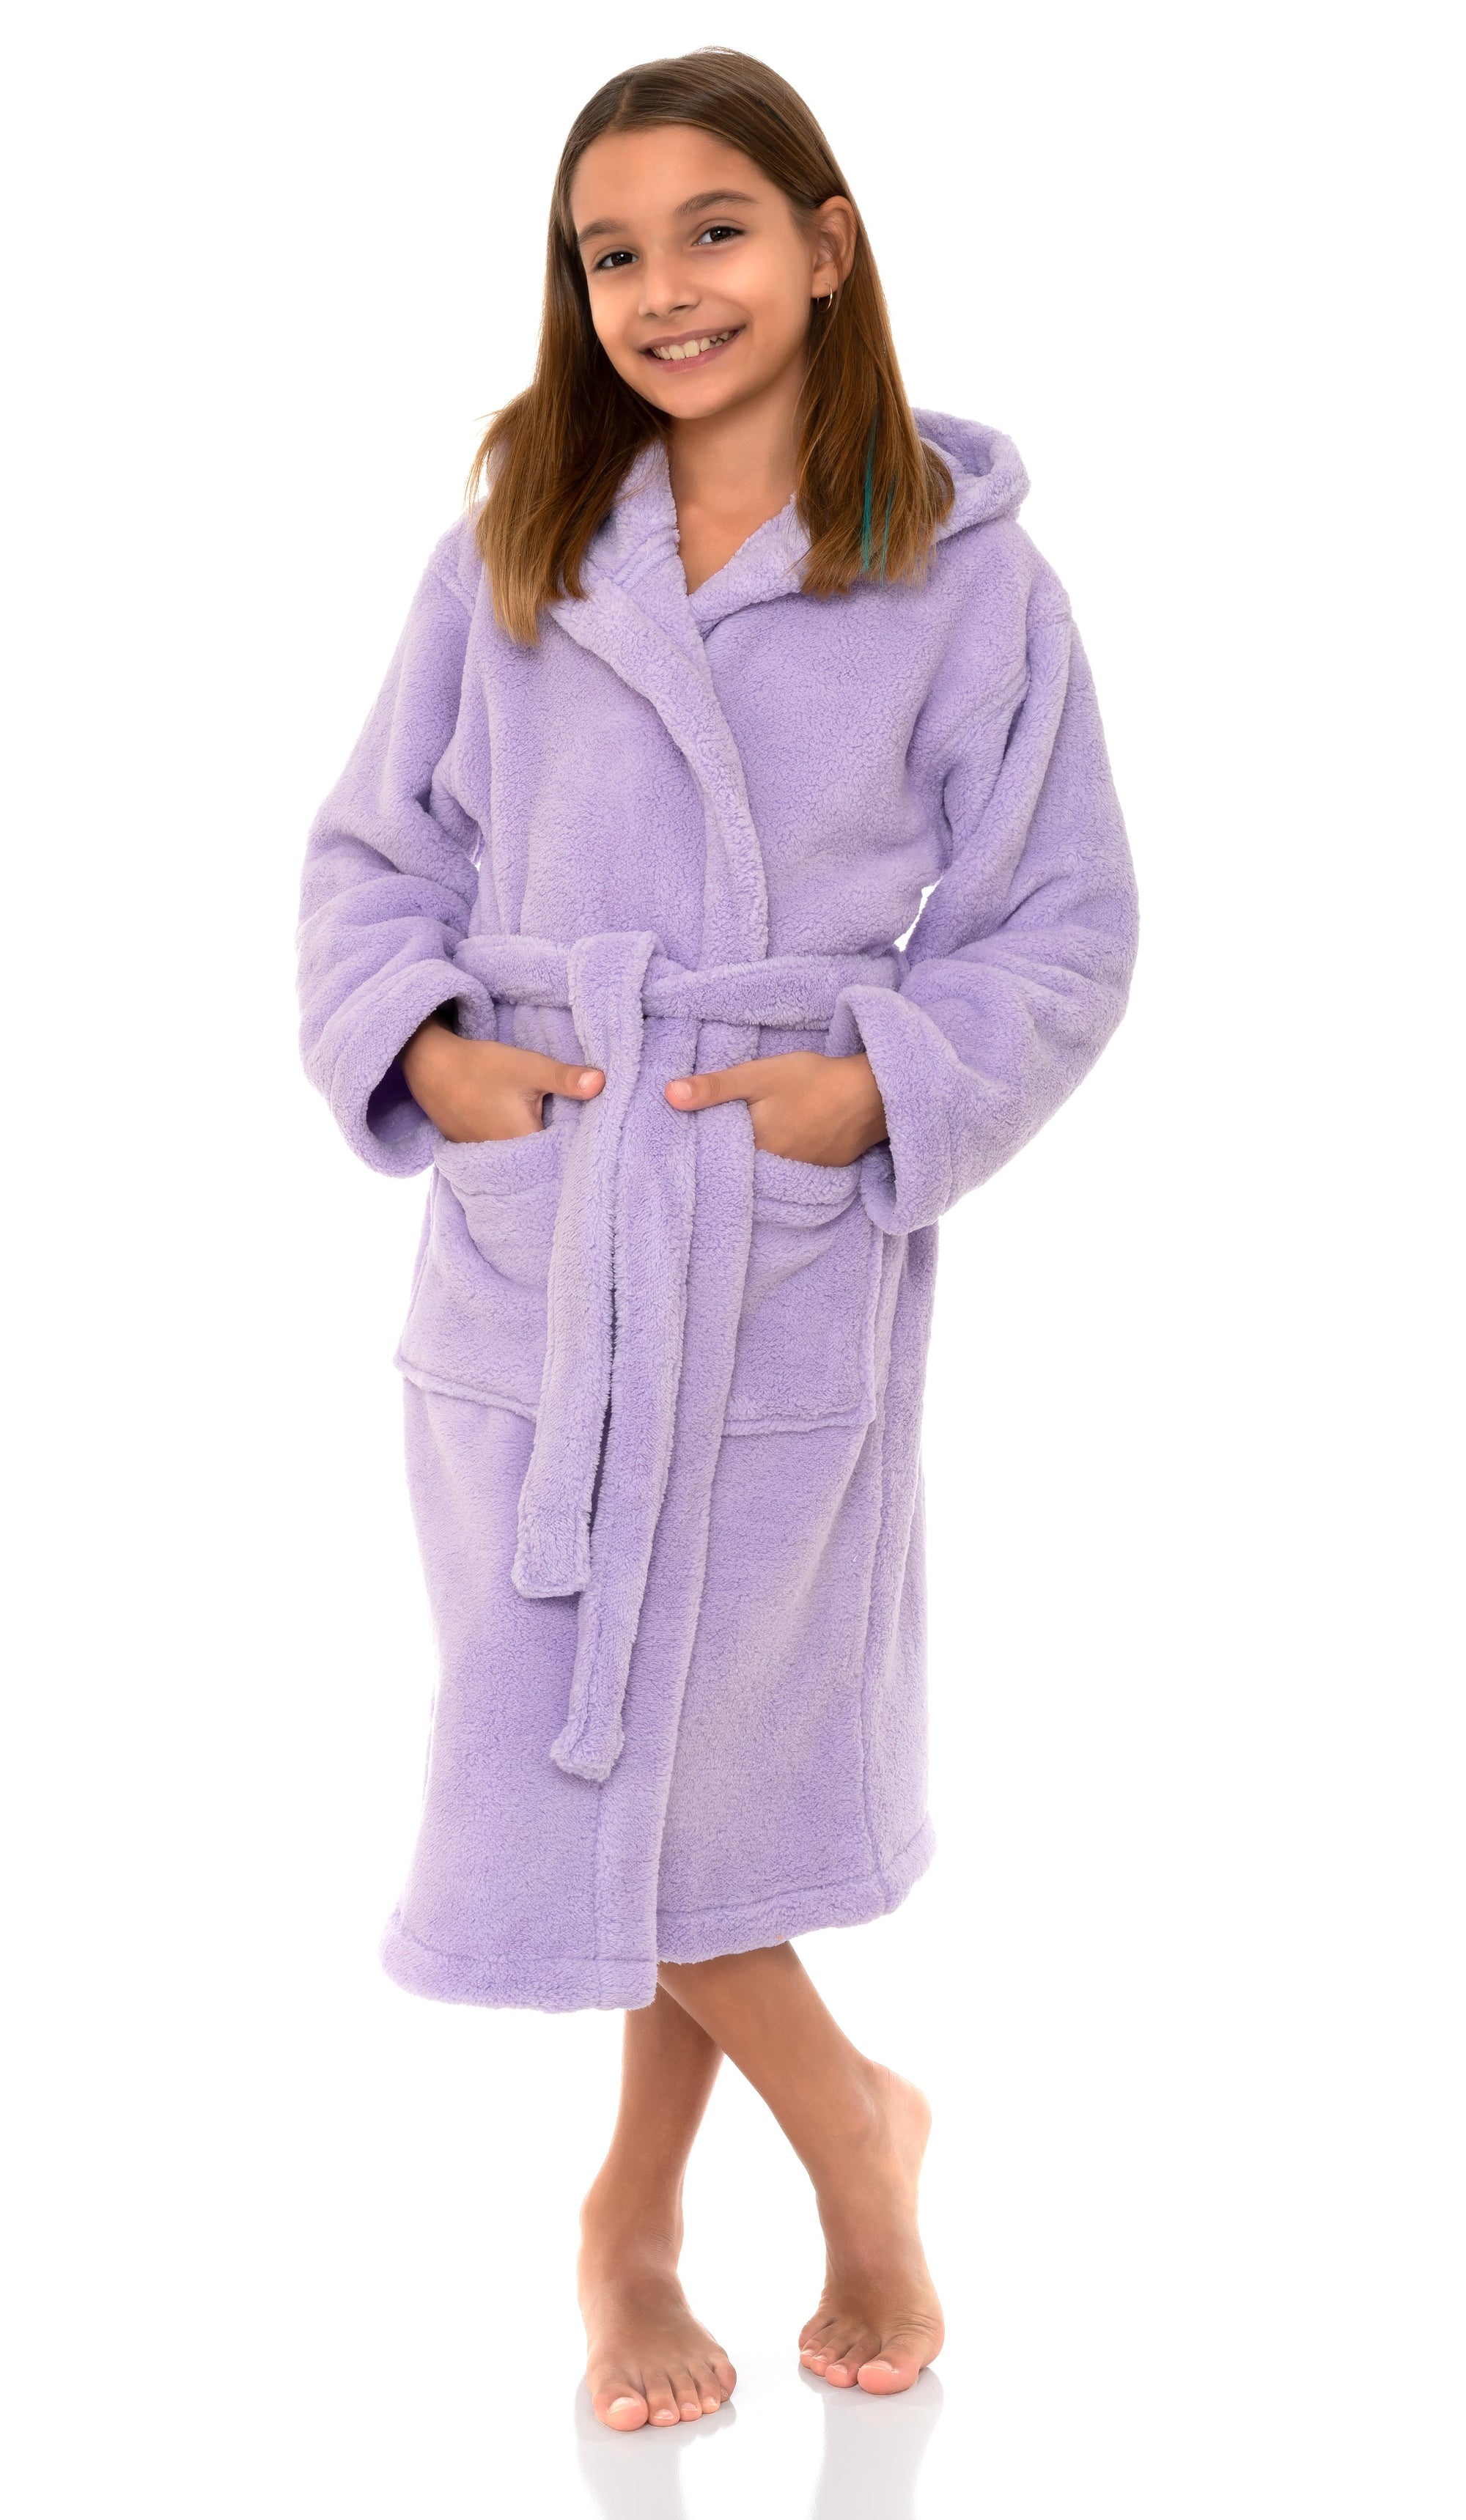 TowelSelections Girls Robe, Kids Soft Plush Hooded Fleece Bathrobe